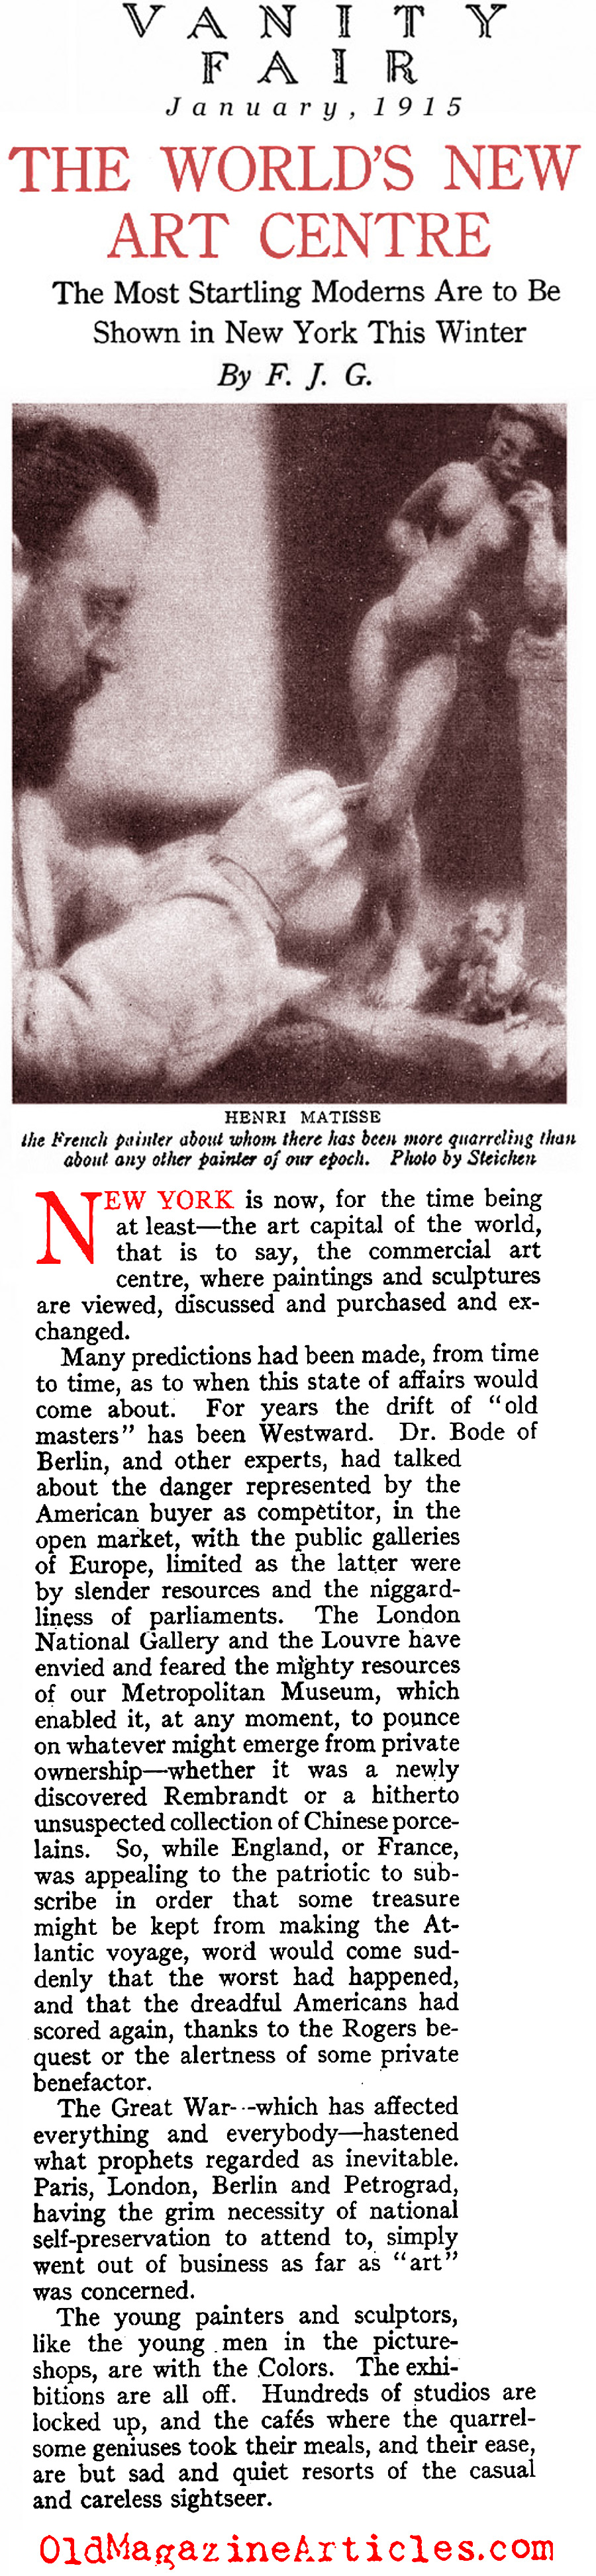 Henri Matisse Viewing in New York  (Vanity Fair, 1915)